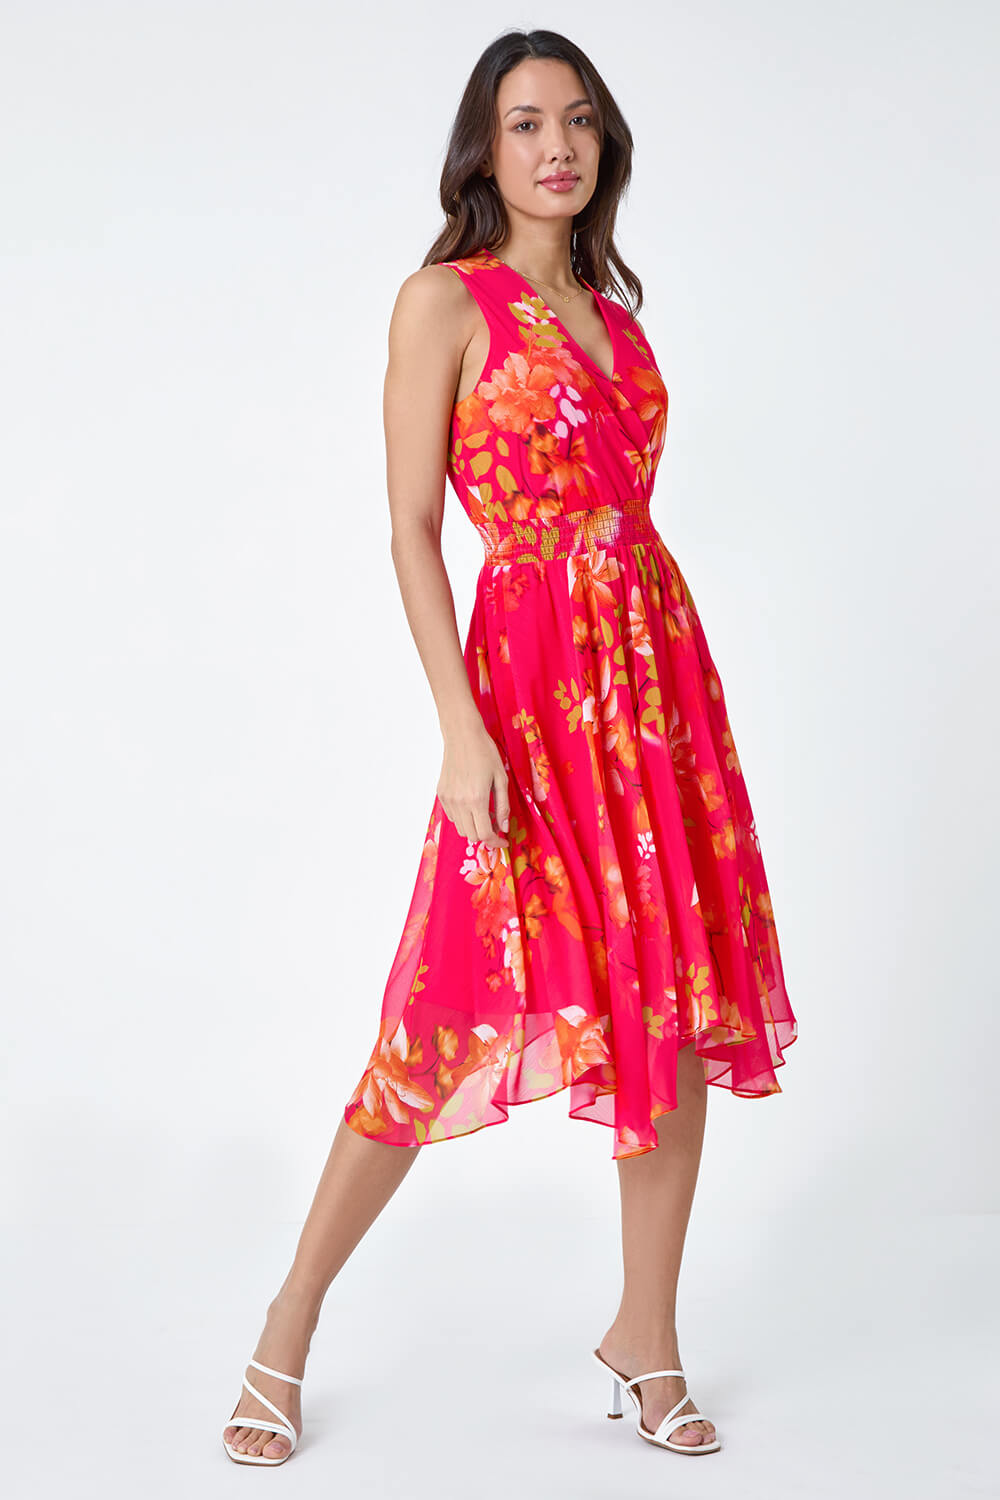 CERISE Floral Print Shirred Asymmetric Dress, Image 2 of 6